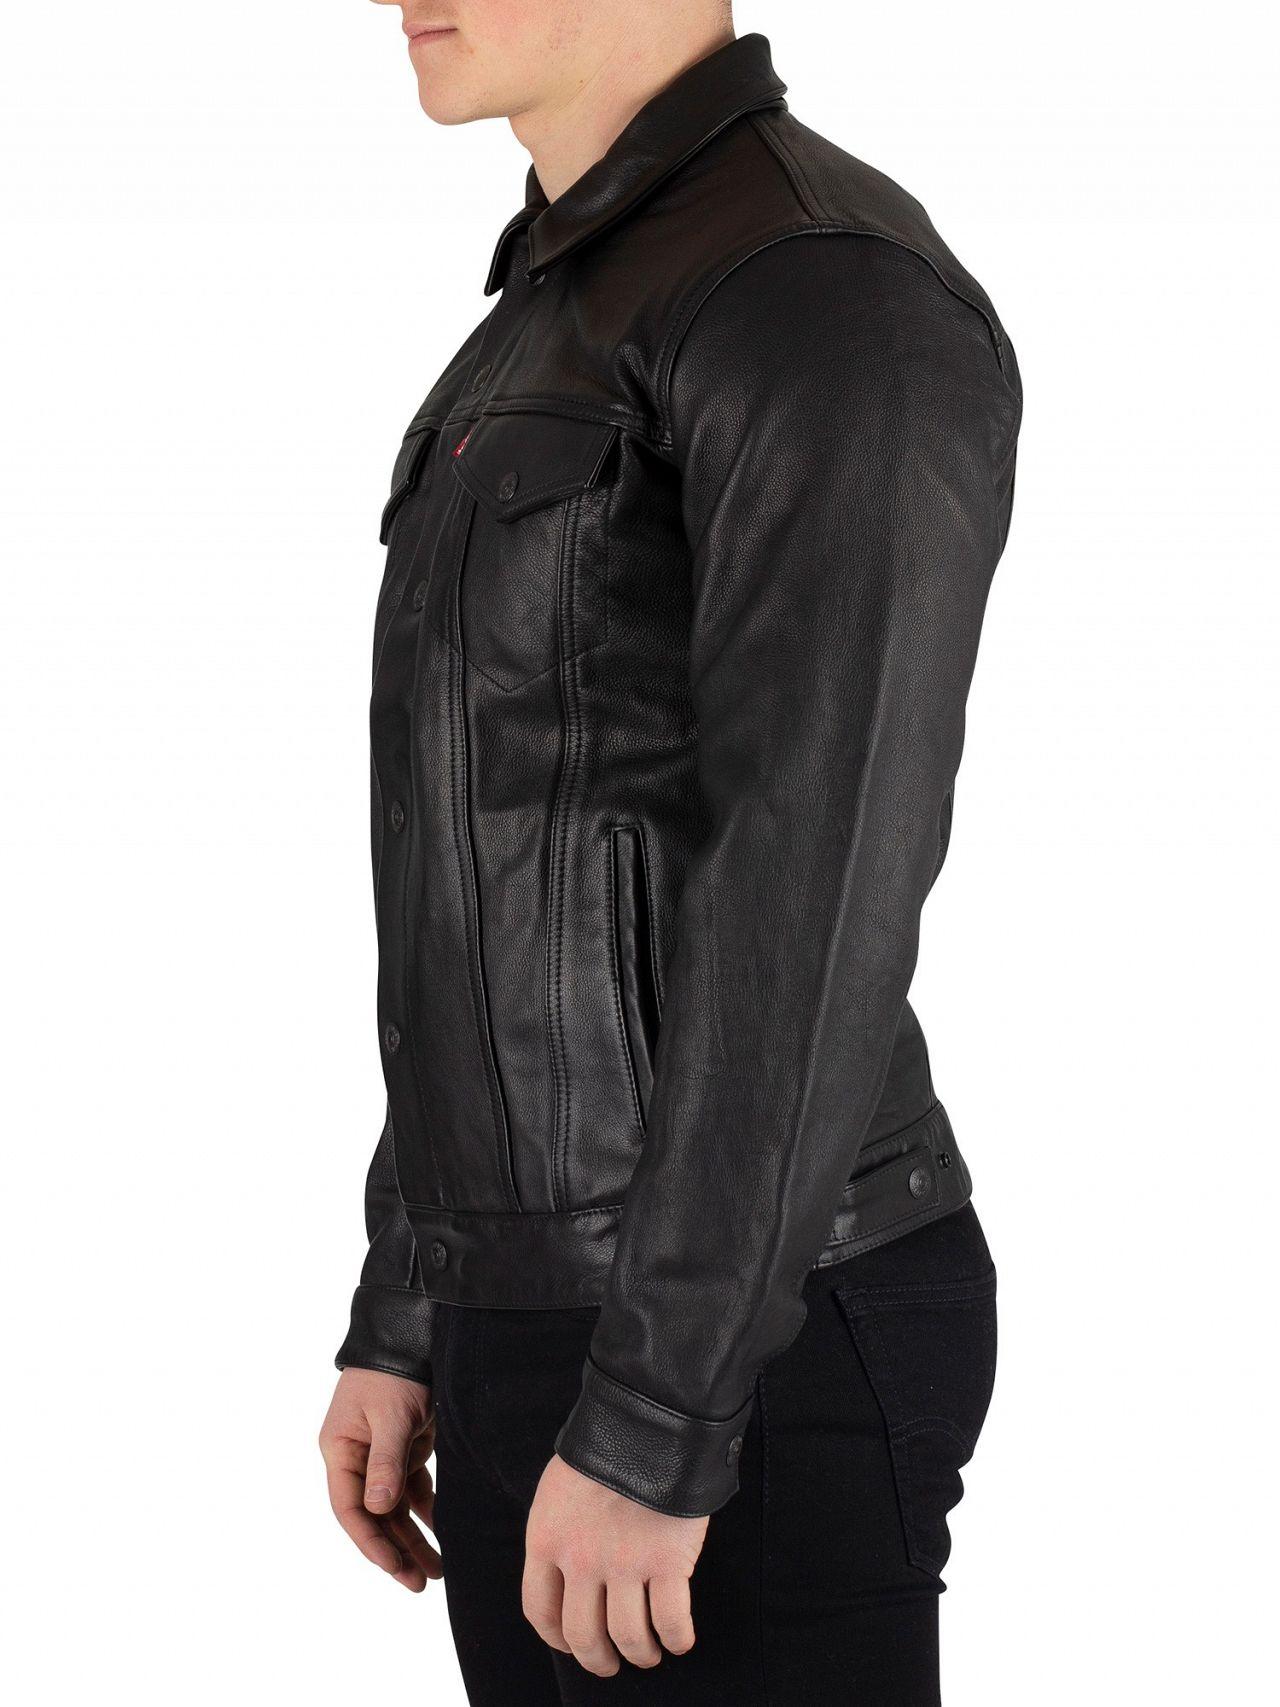 Levi's Type 3 Black Leather Trucker Jacket for Men - Lyst